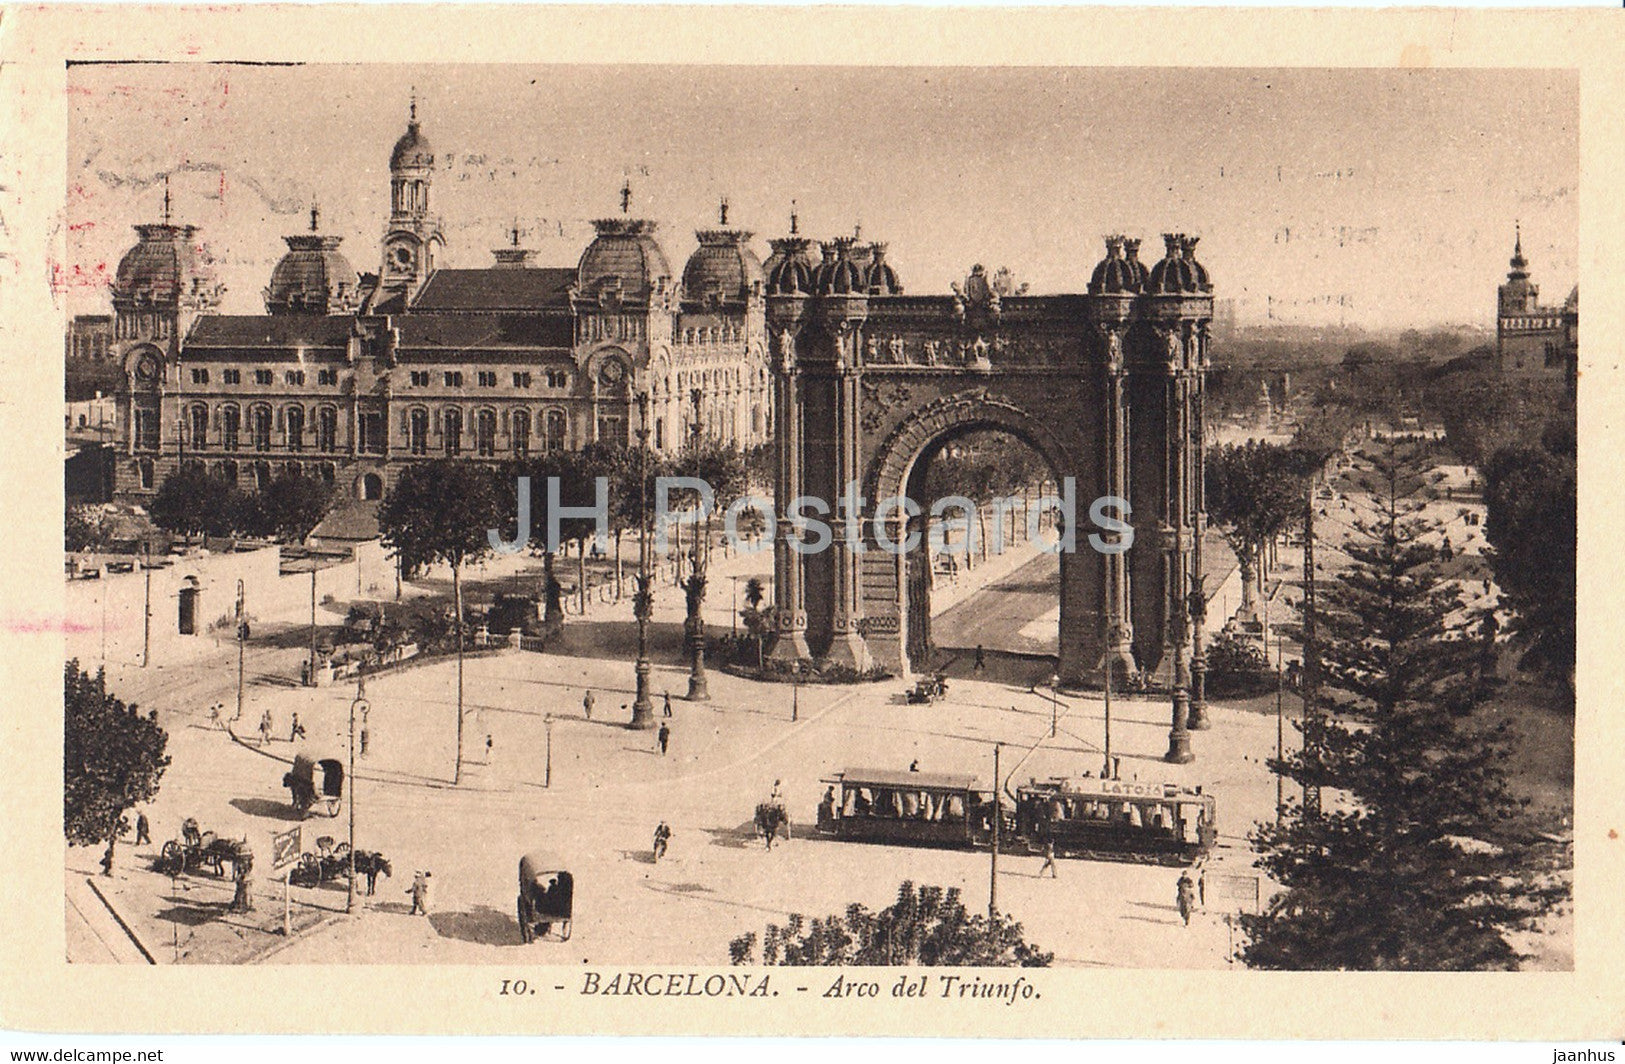 Barcelona - Arco del Triunfo - tram - 10 - old postcard - 1928 - Spain - used - JH Postcards